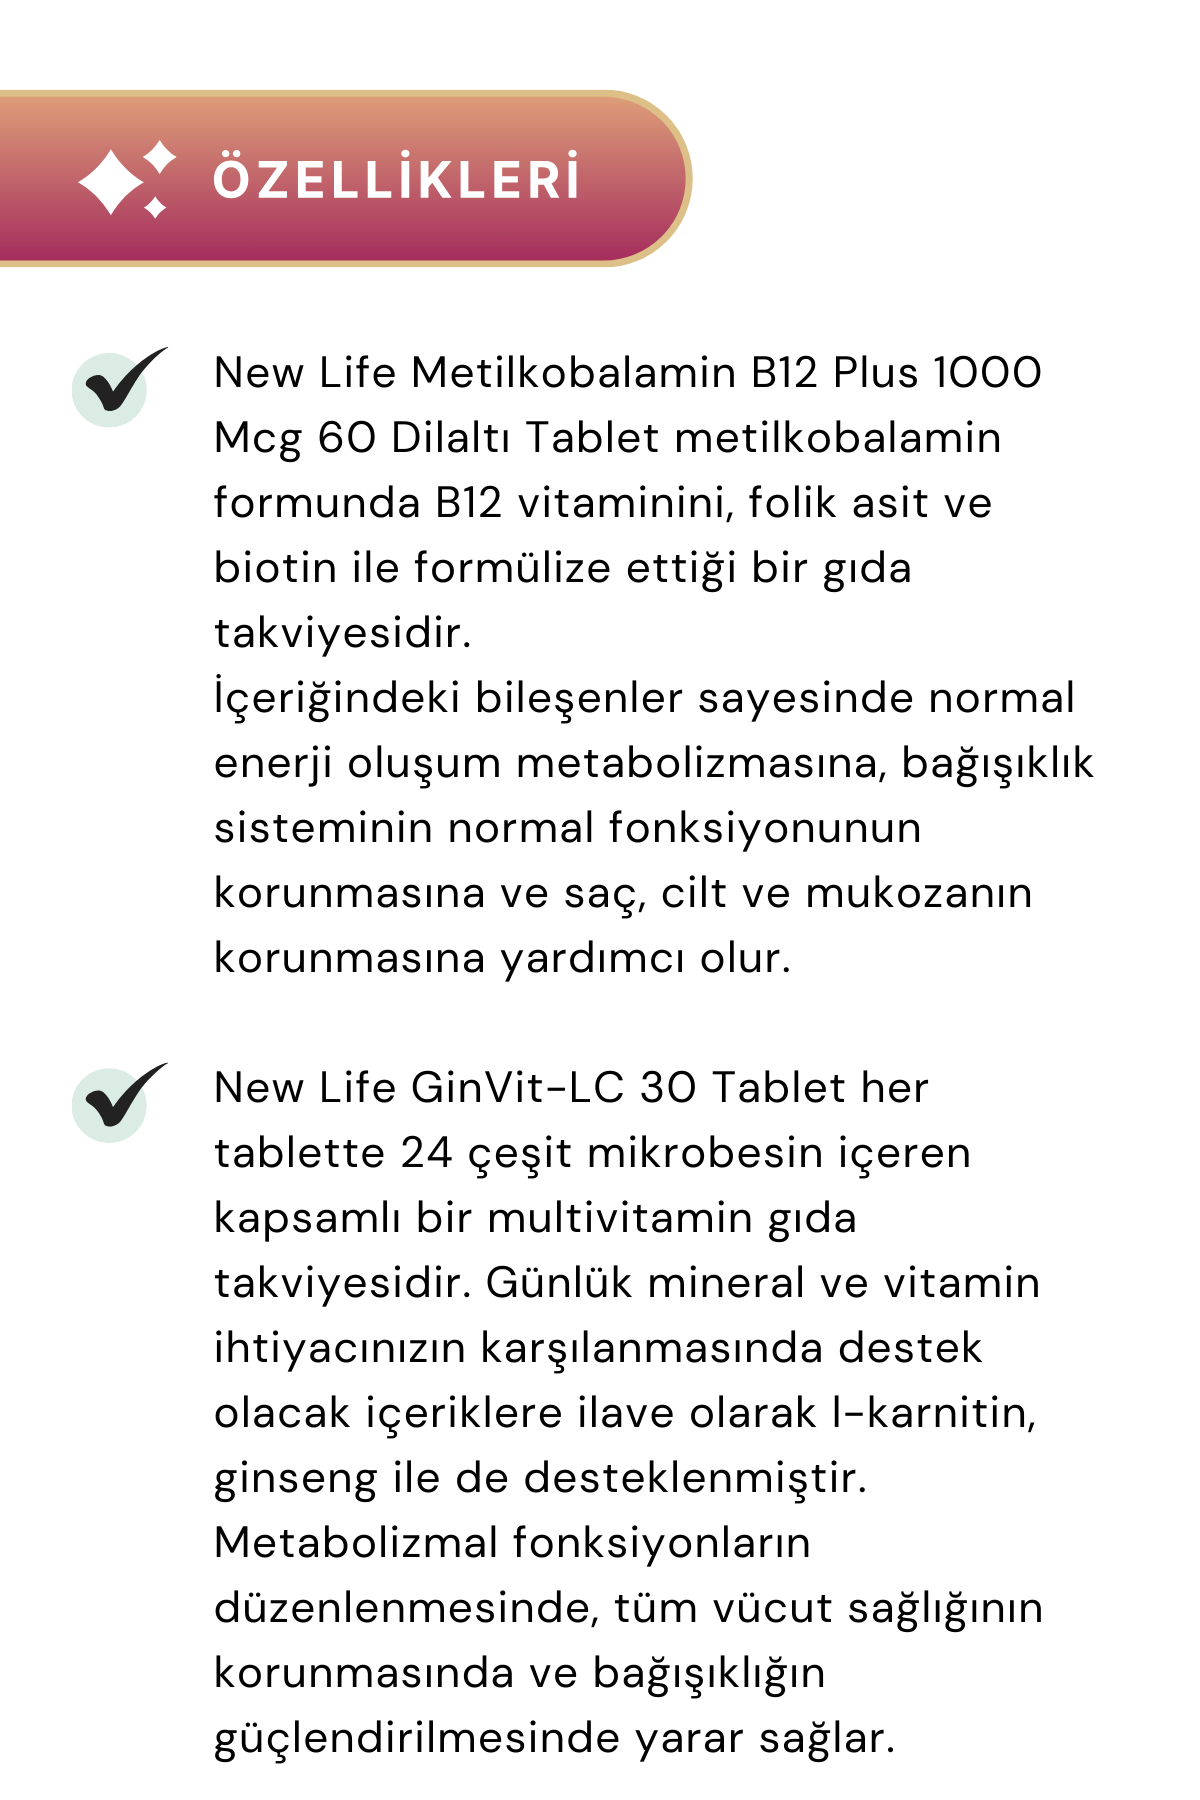 New Life B12 Plus 60 Tablet & Ginvit-Lc